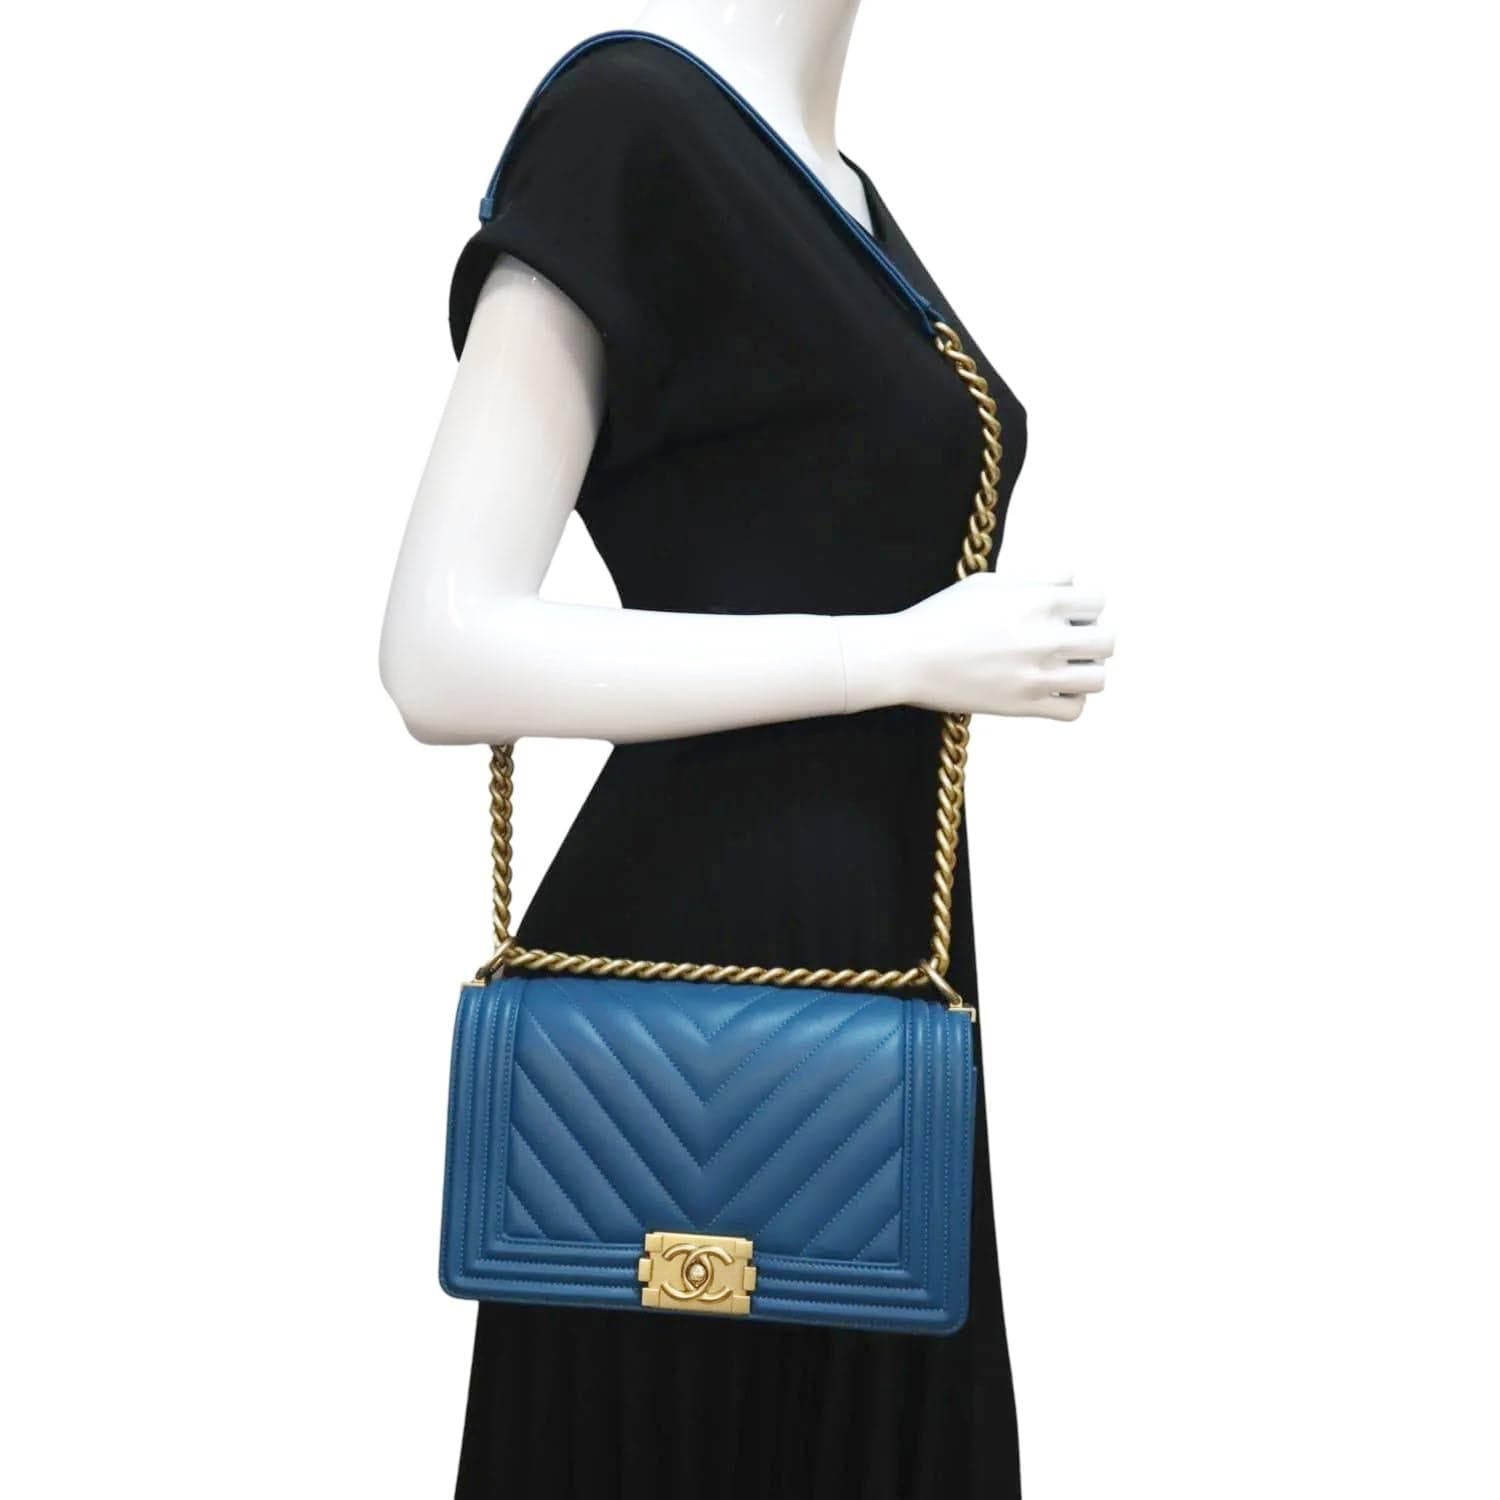 Handbags Chanel Boy Medium Chevron Calf Leather Blue Flap Bag